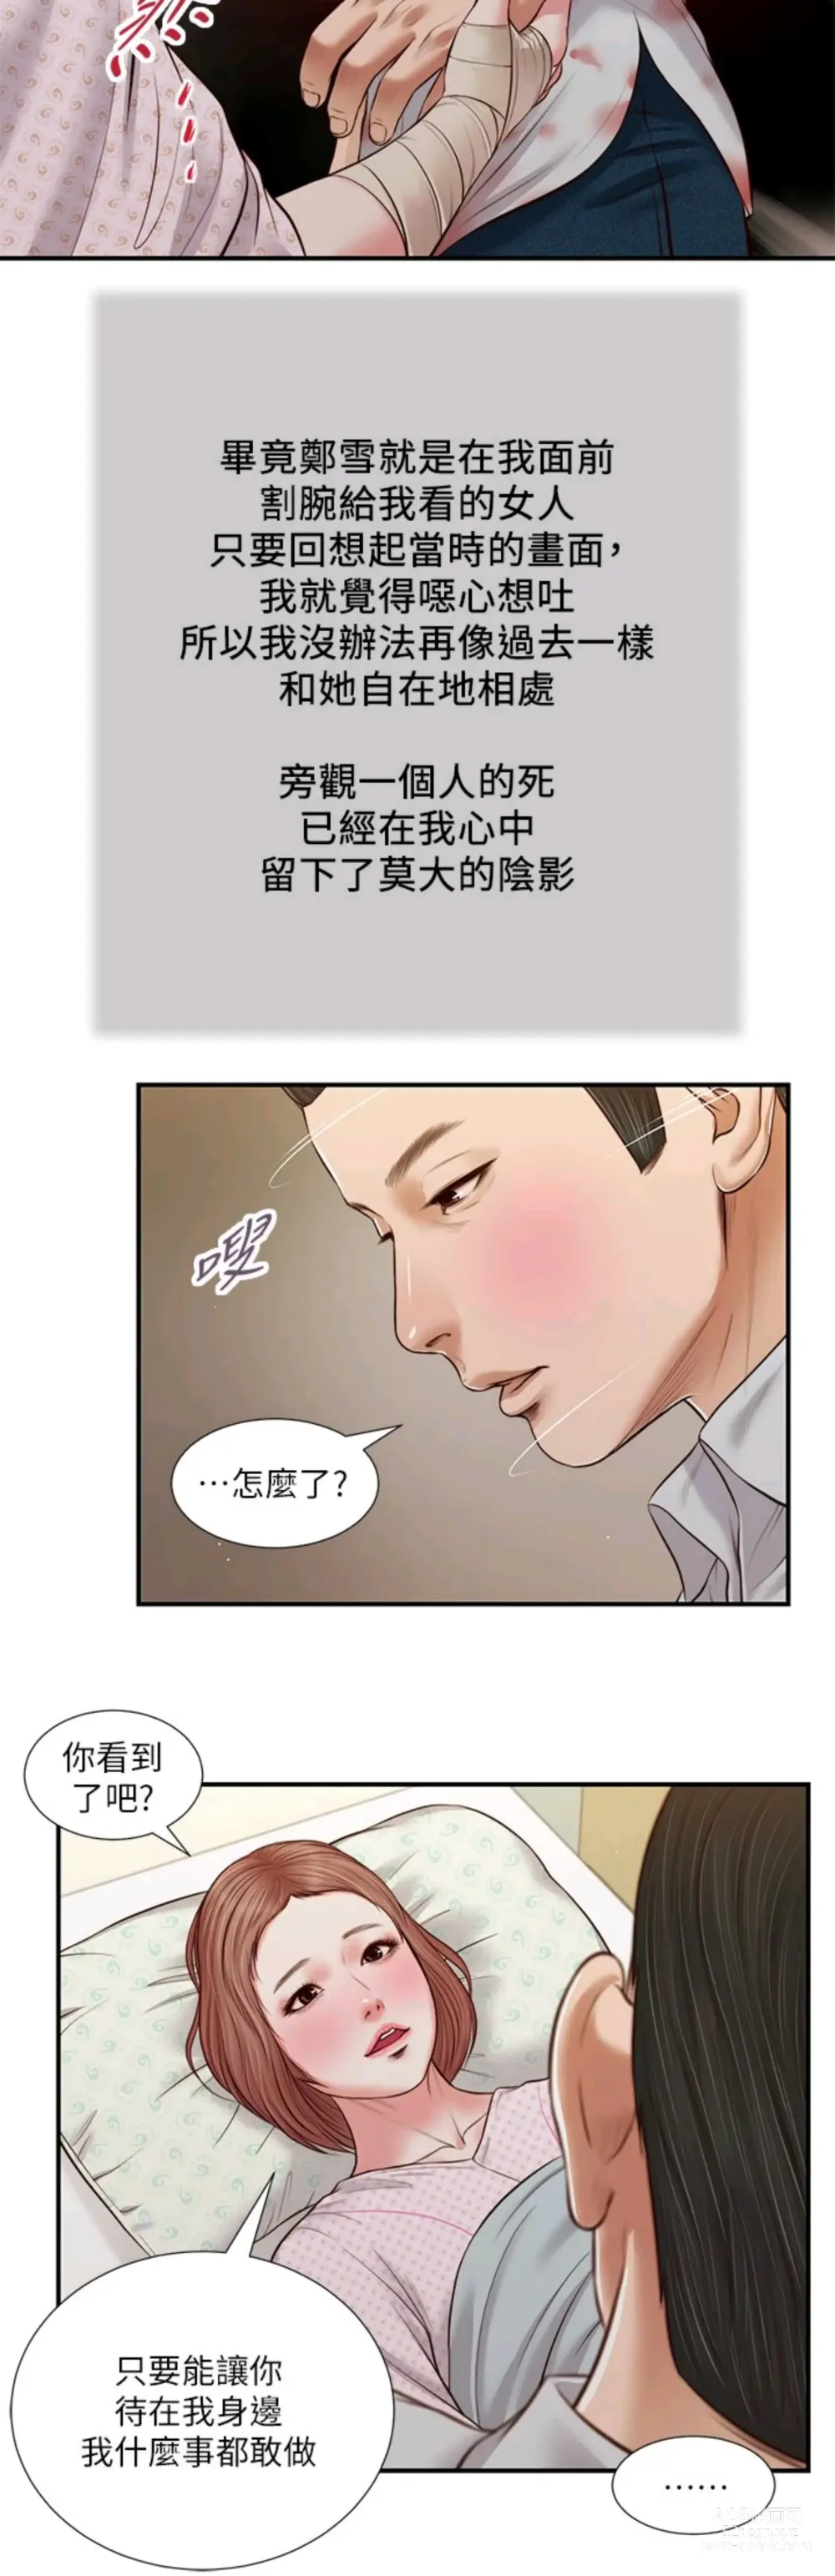 Page 1764 of manga 小妾 1-70话